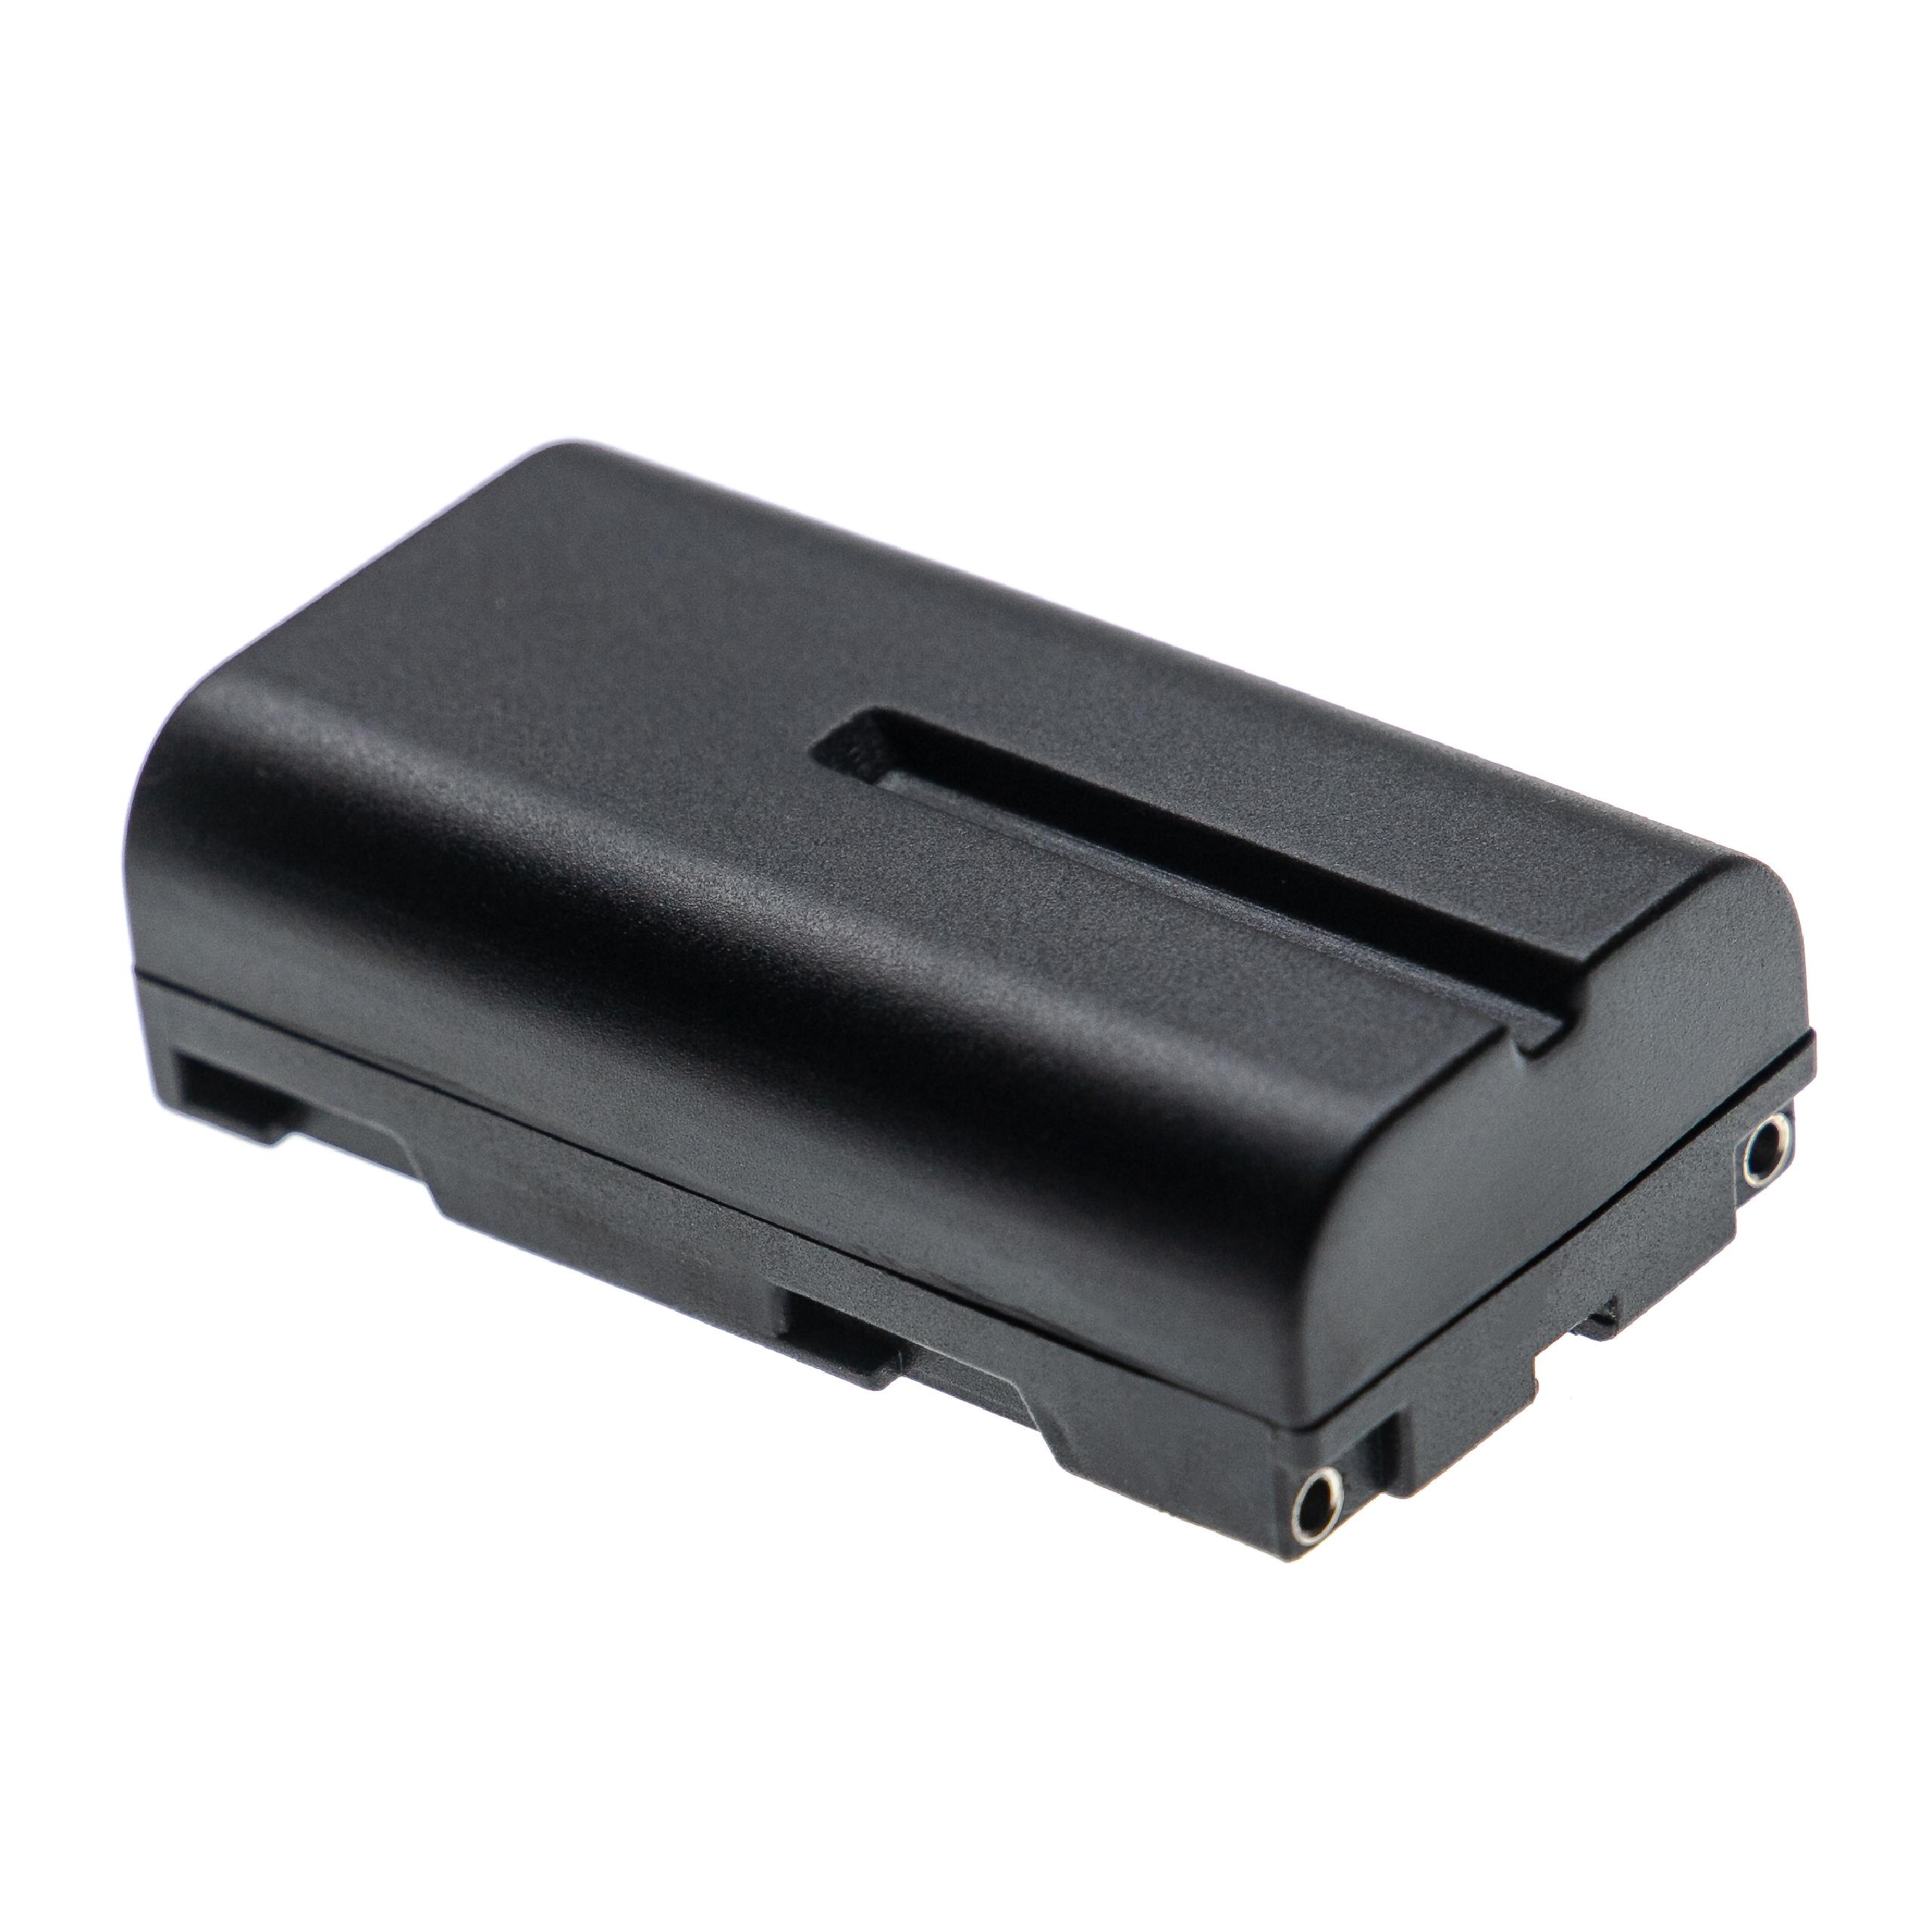 Batteria per stampante sostituisce Epson C32C831091, LIP-2500, NP-500, NP-500H Epson - 2600mAh 7,4V Li-Ion